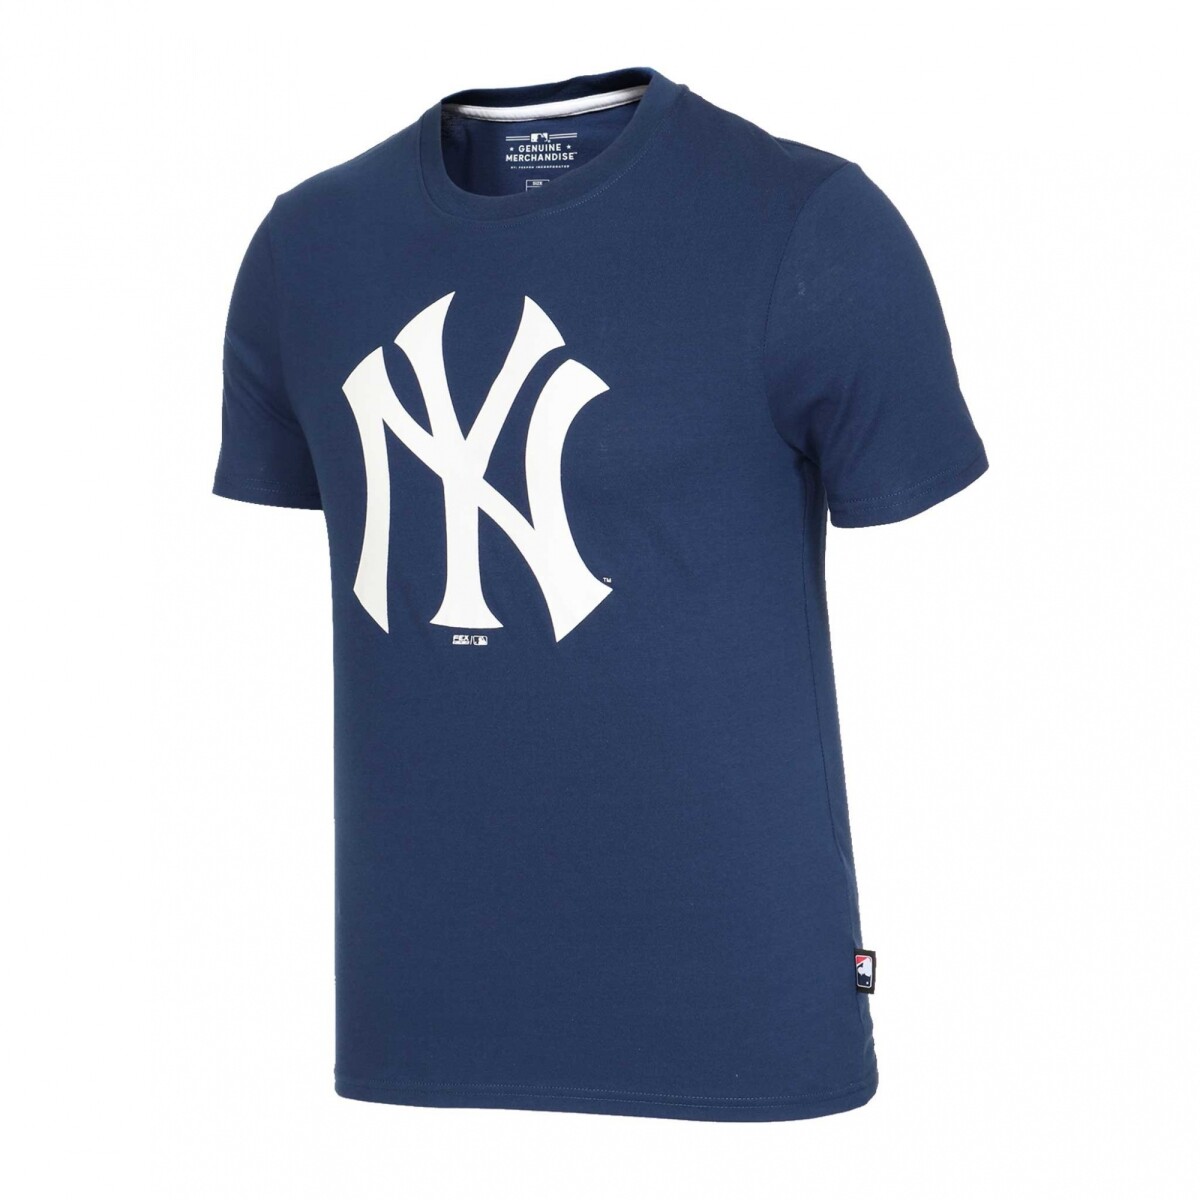 Remera MLB NY Yankees - S/C 